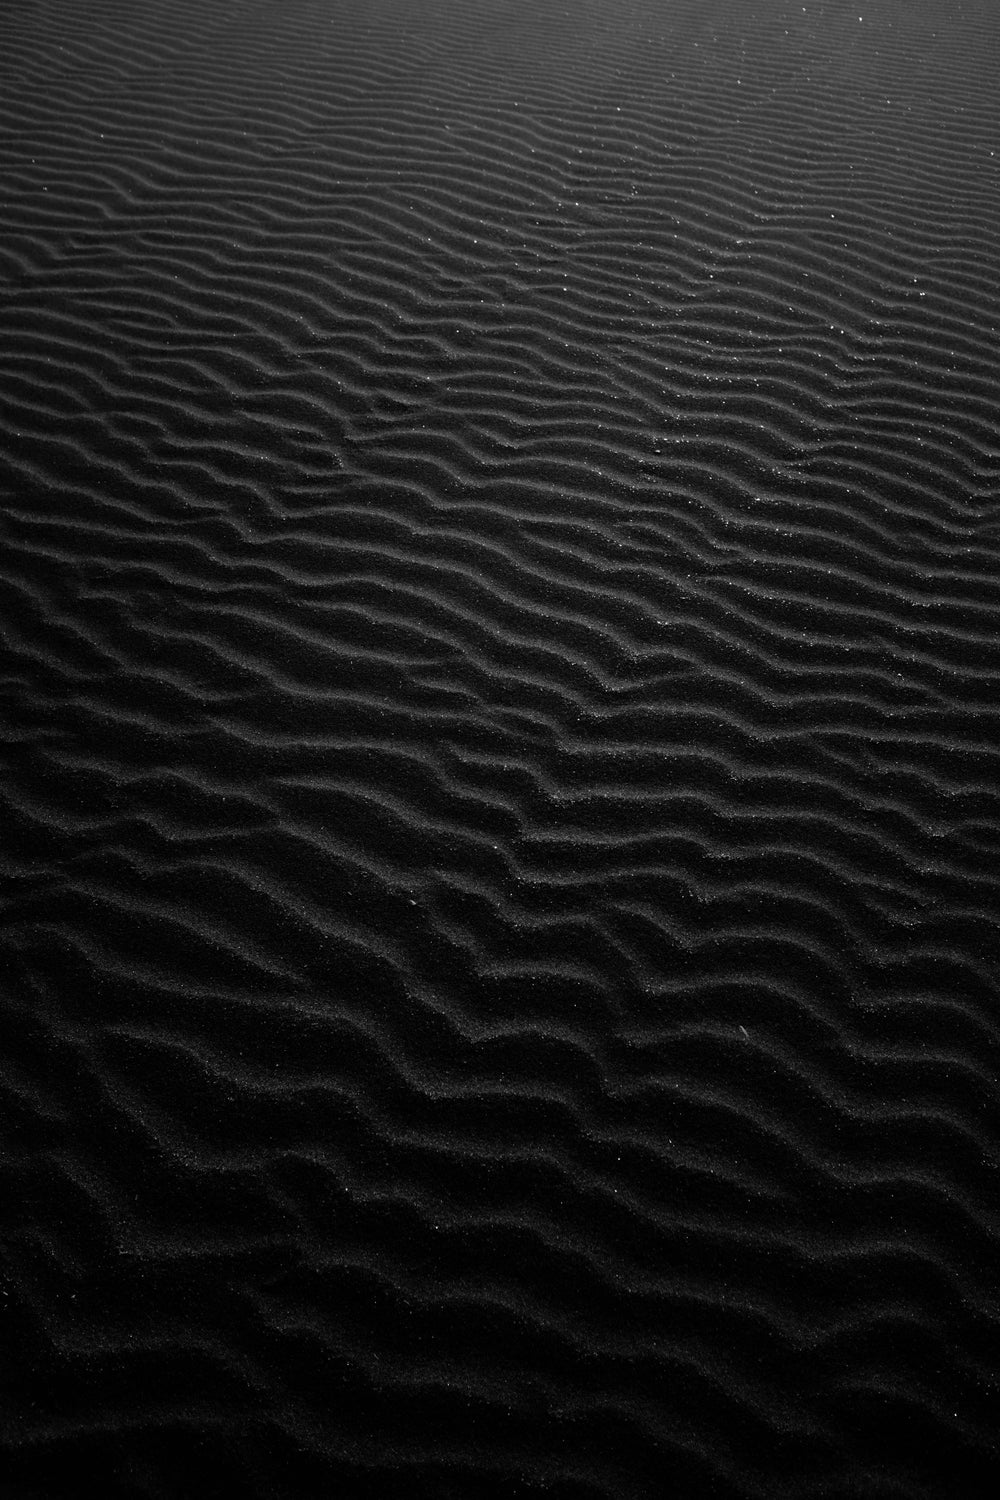 black and white beach background